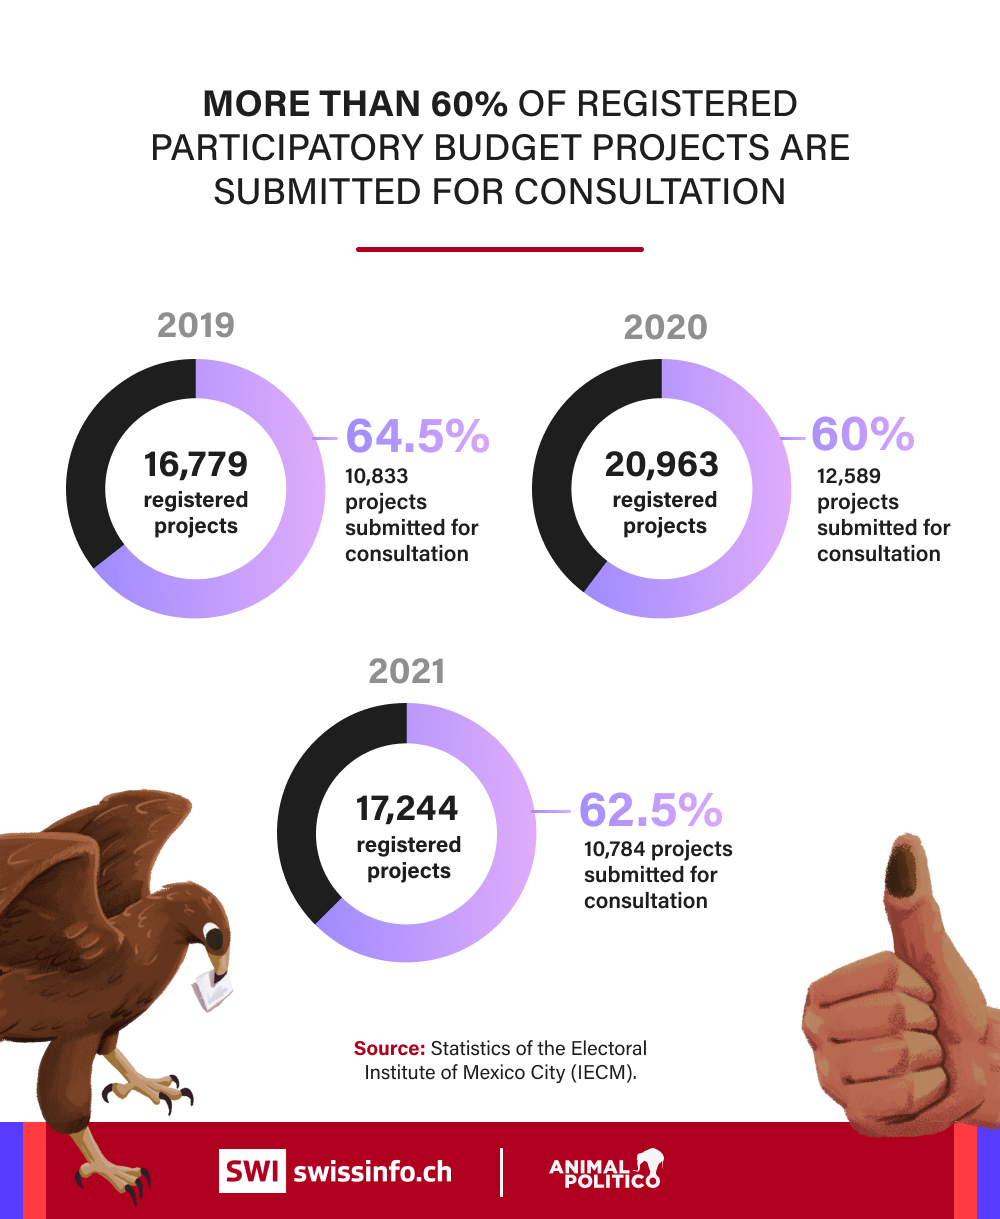 Budget graphic